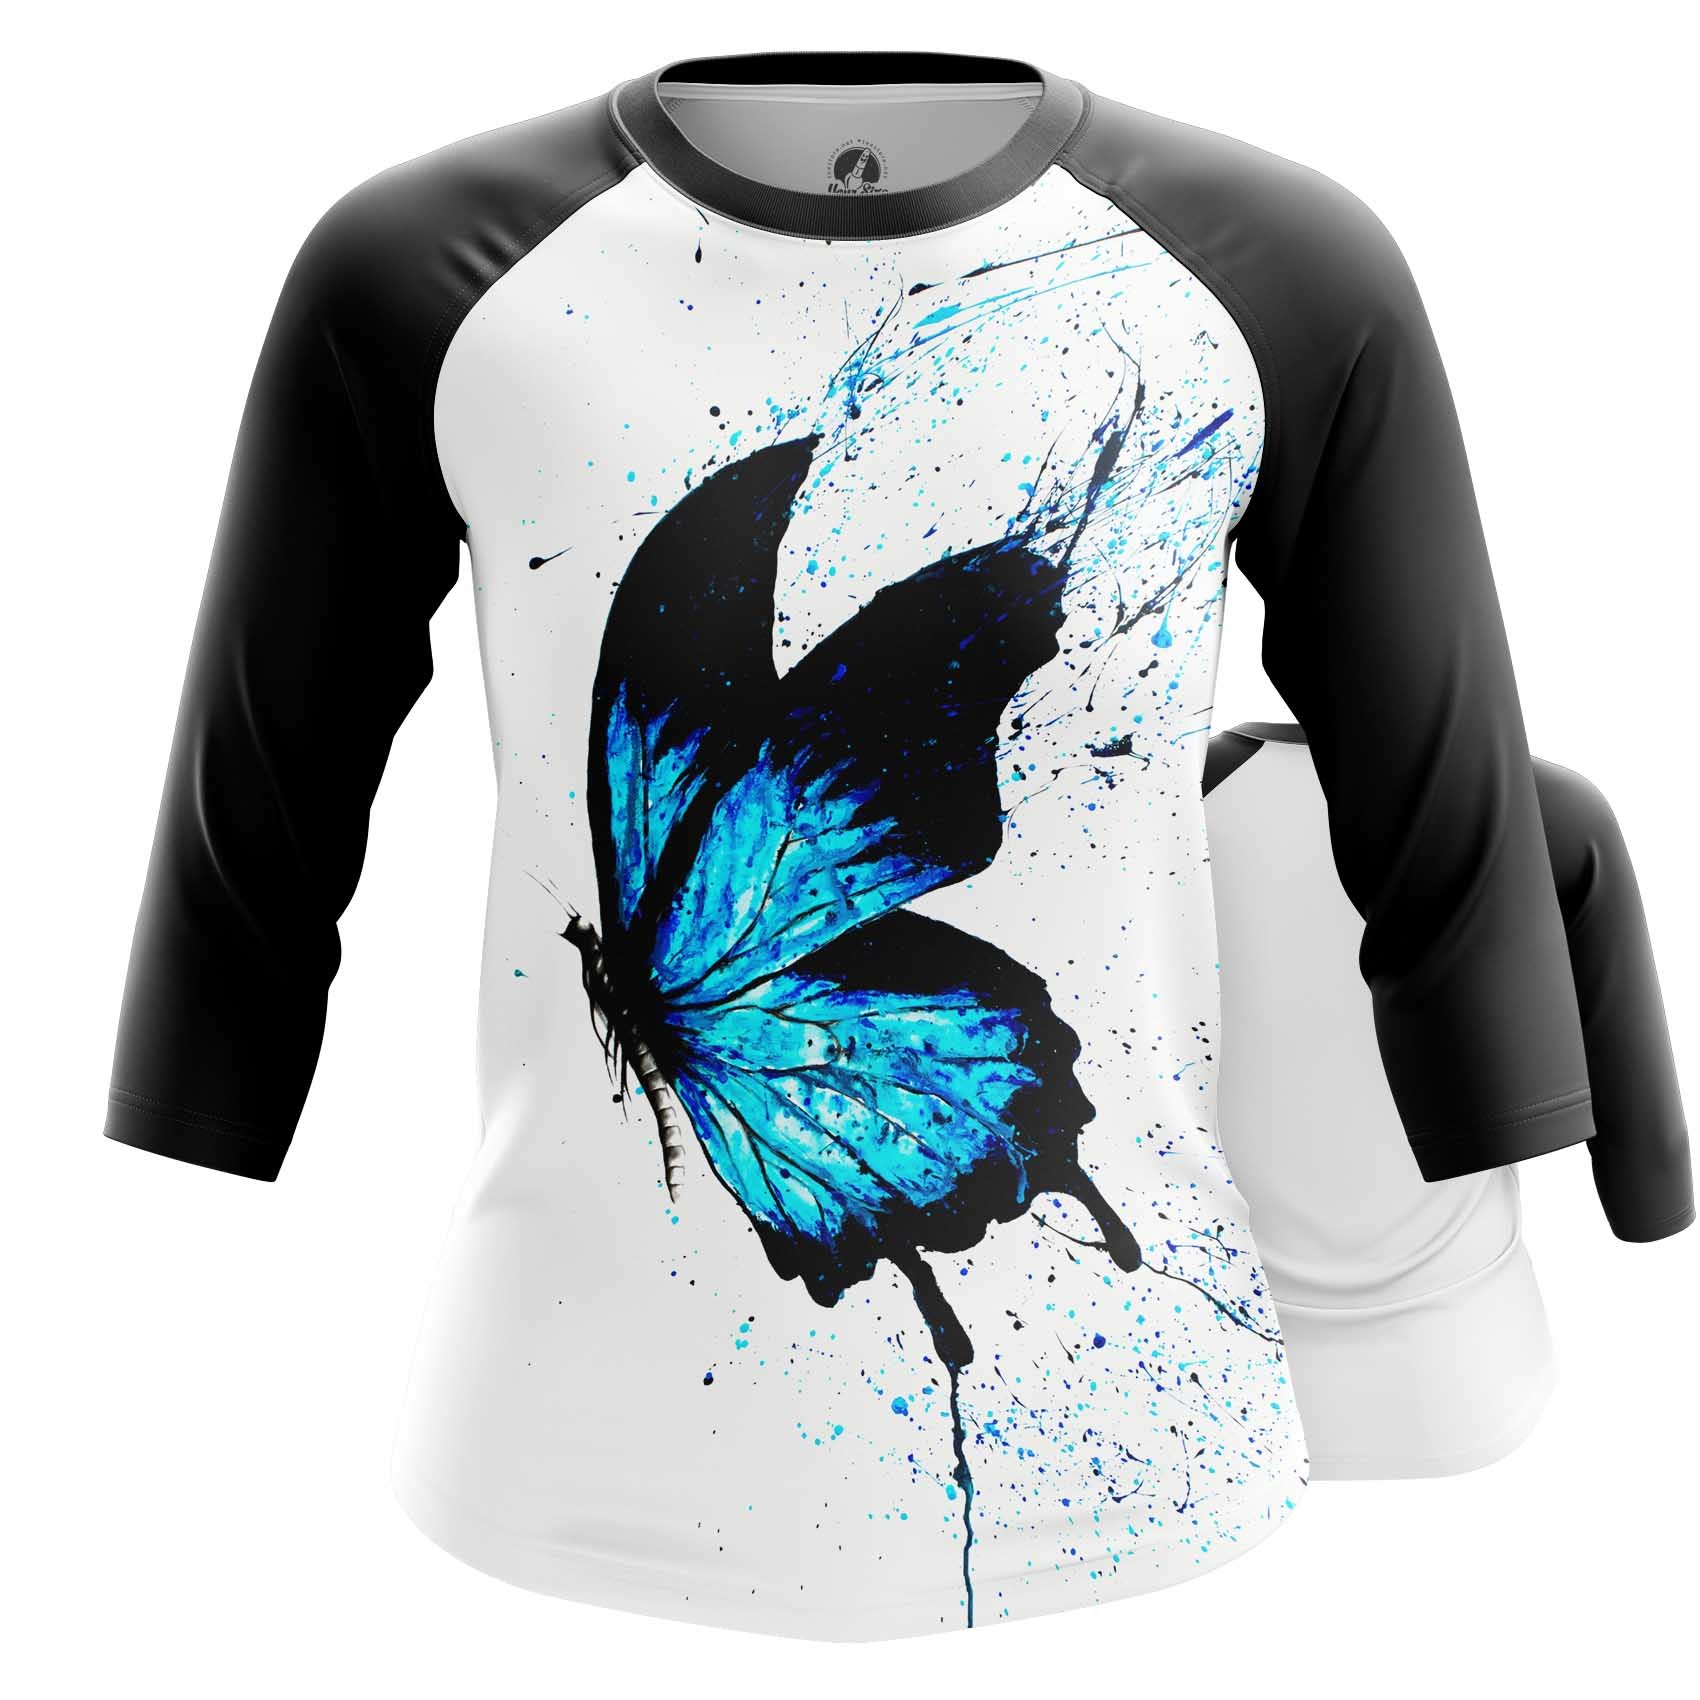 Кофта с бабочкой. Кофта с бабочками. Бабочка одежда. Толстовка с голубыми бабочками. Кофта с крыльями бабочки.